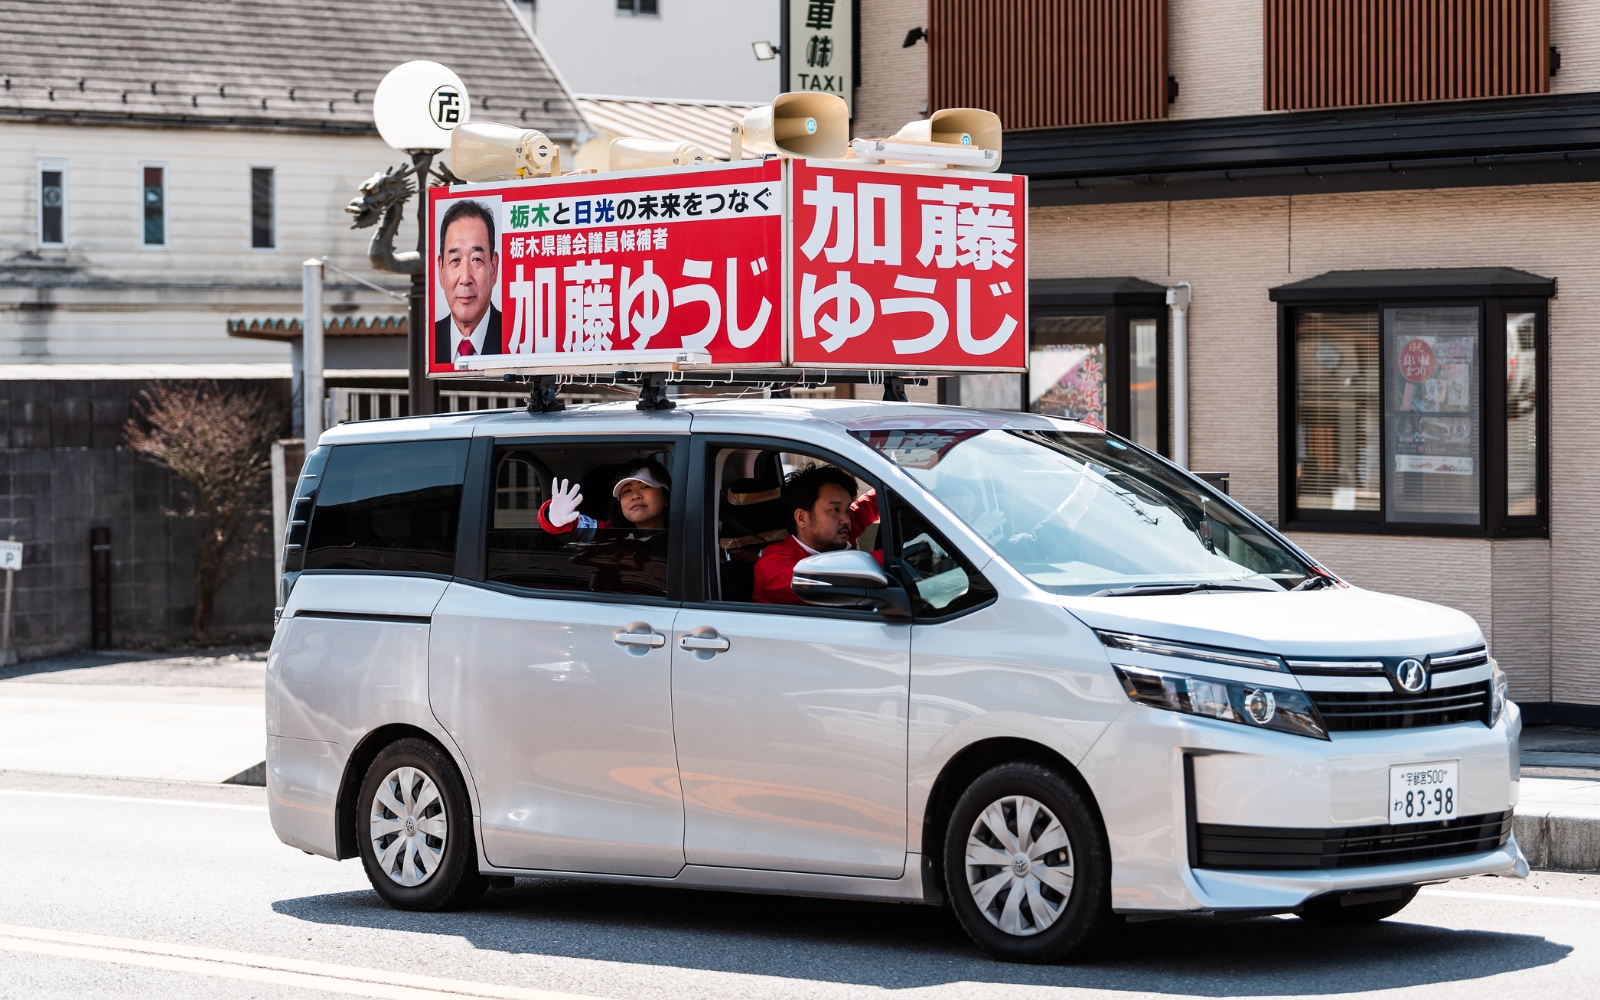 Election-van-noise-pollution-in-Japan-.jpg